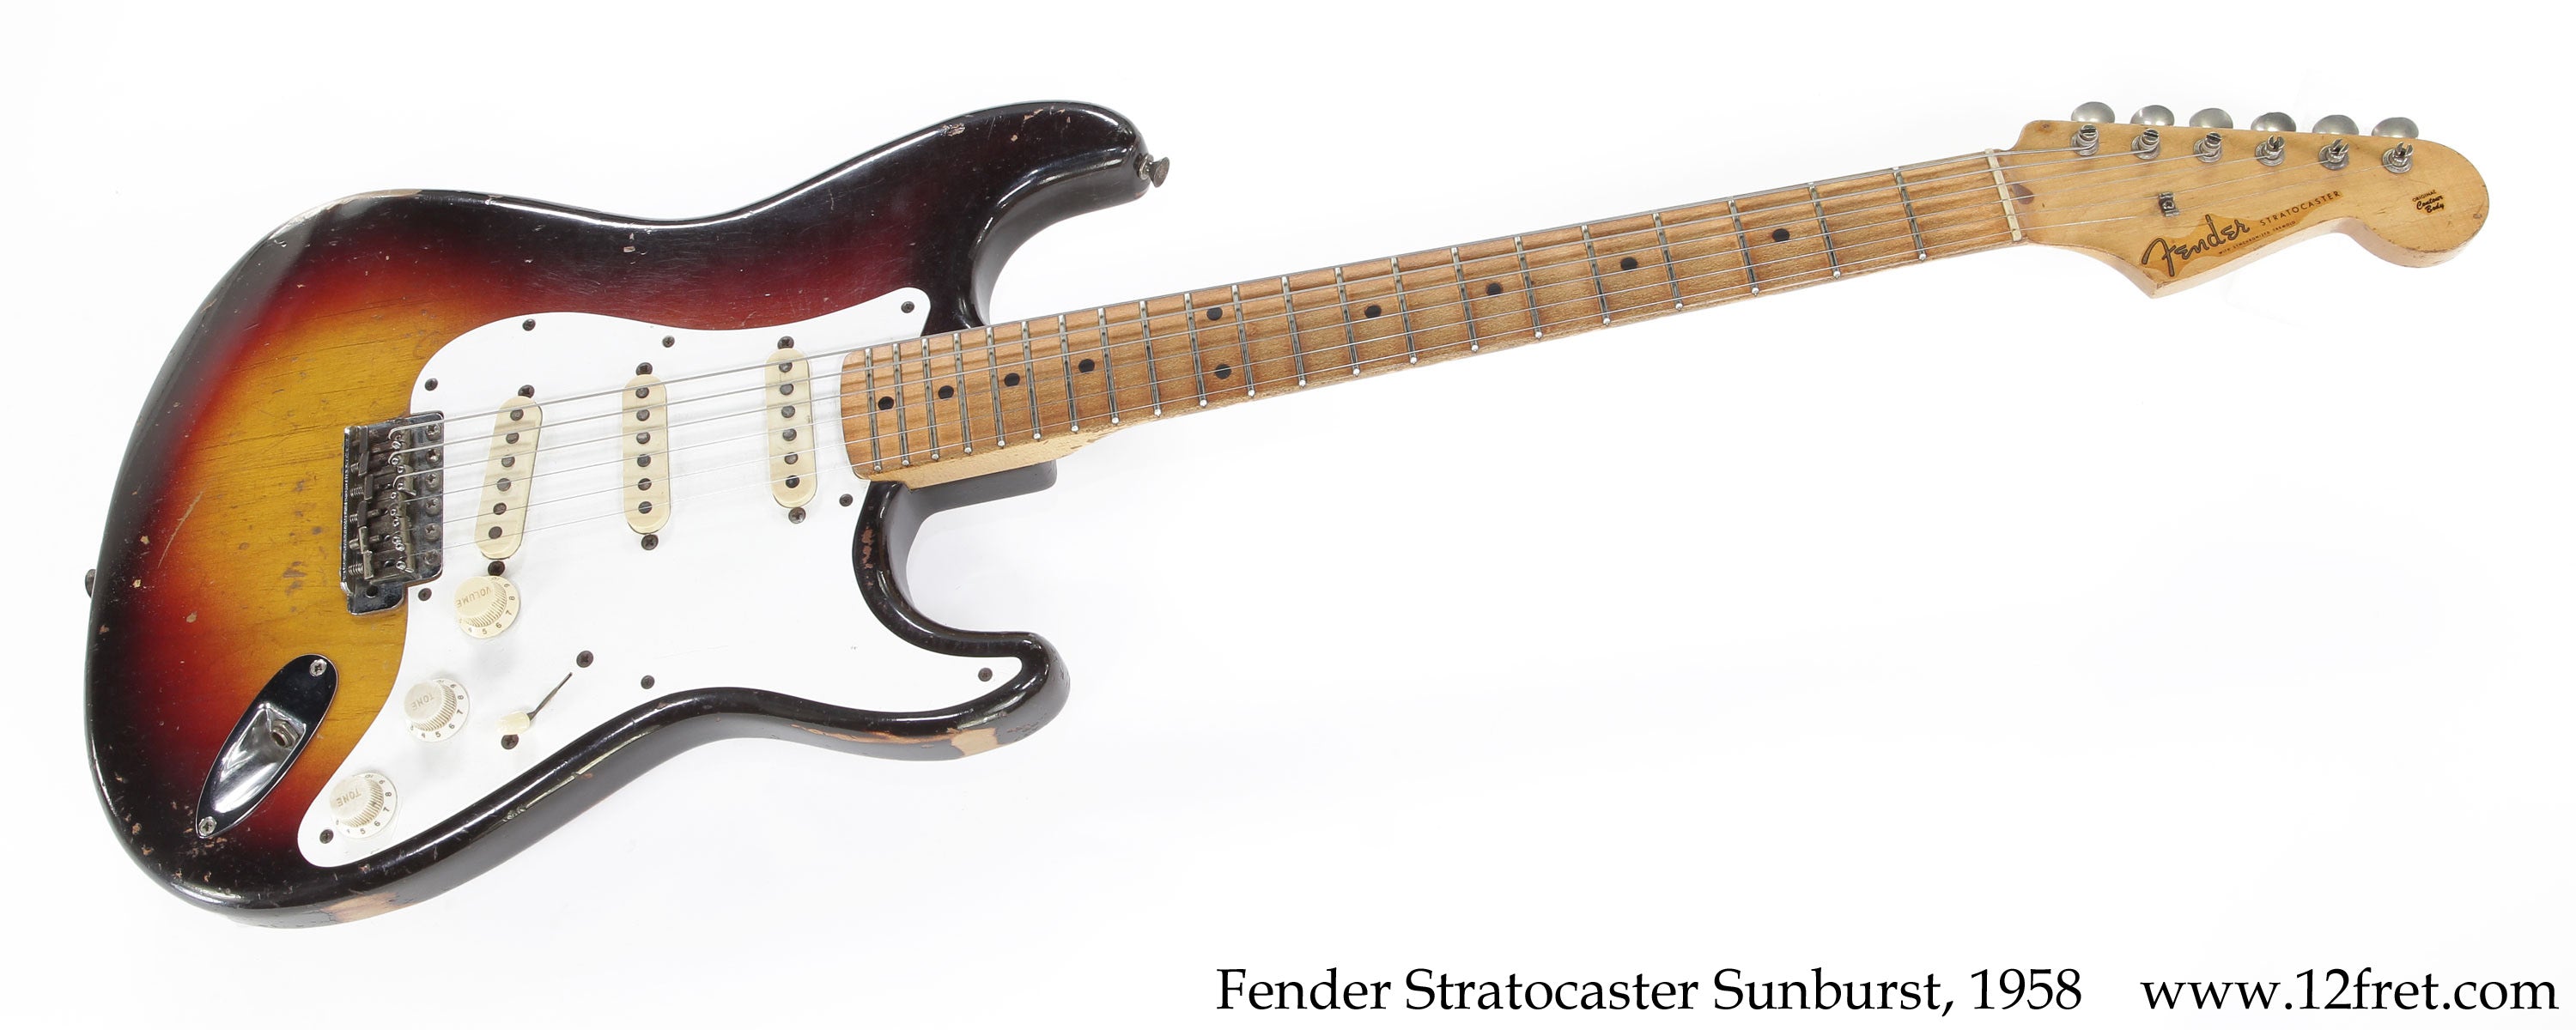 Fender Stratocaster Sunburst, 1958 - The Twelfth Fret